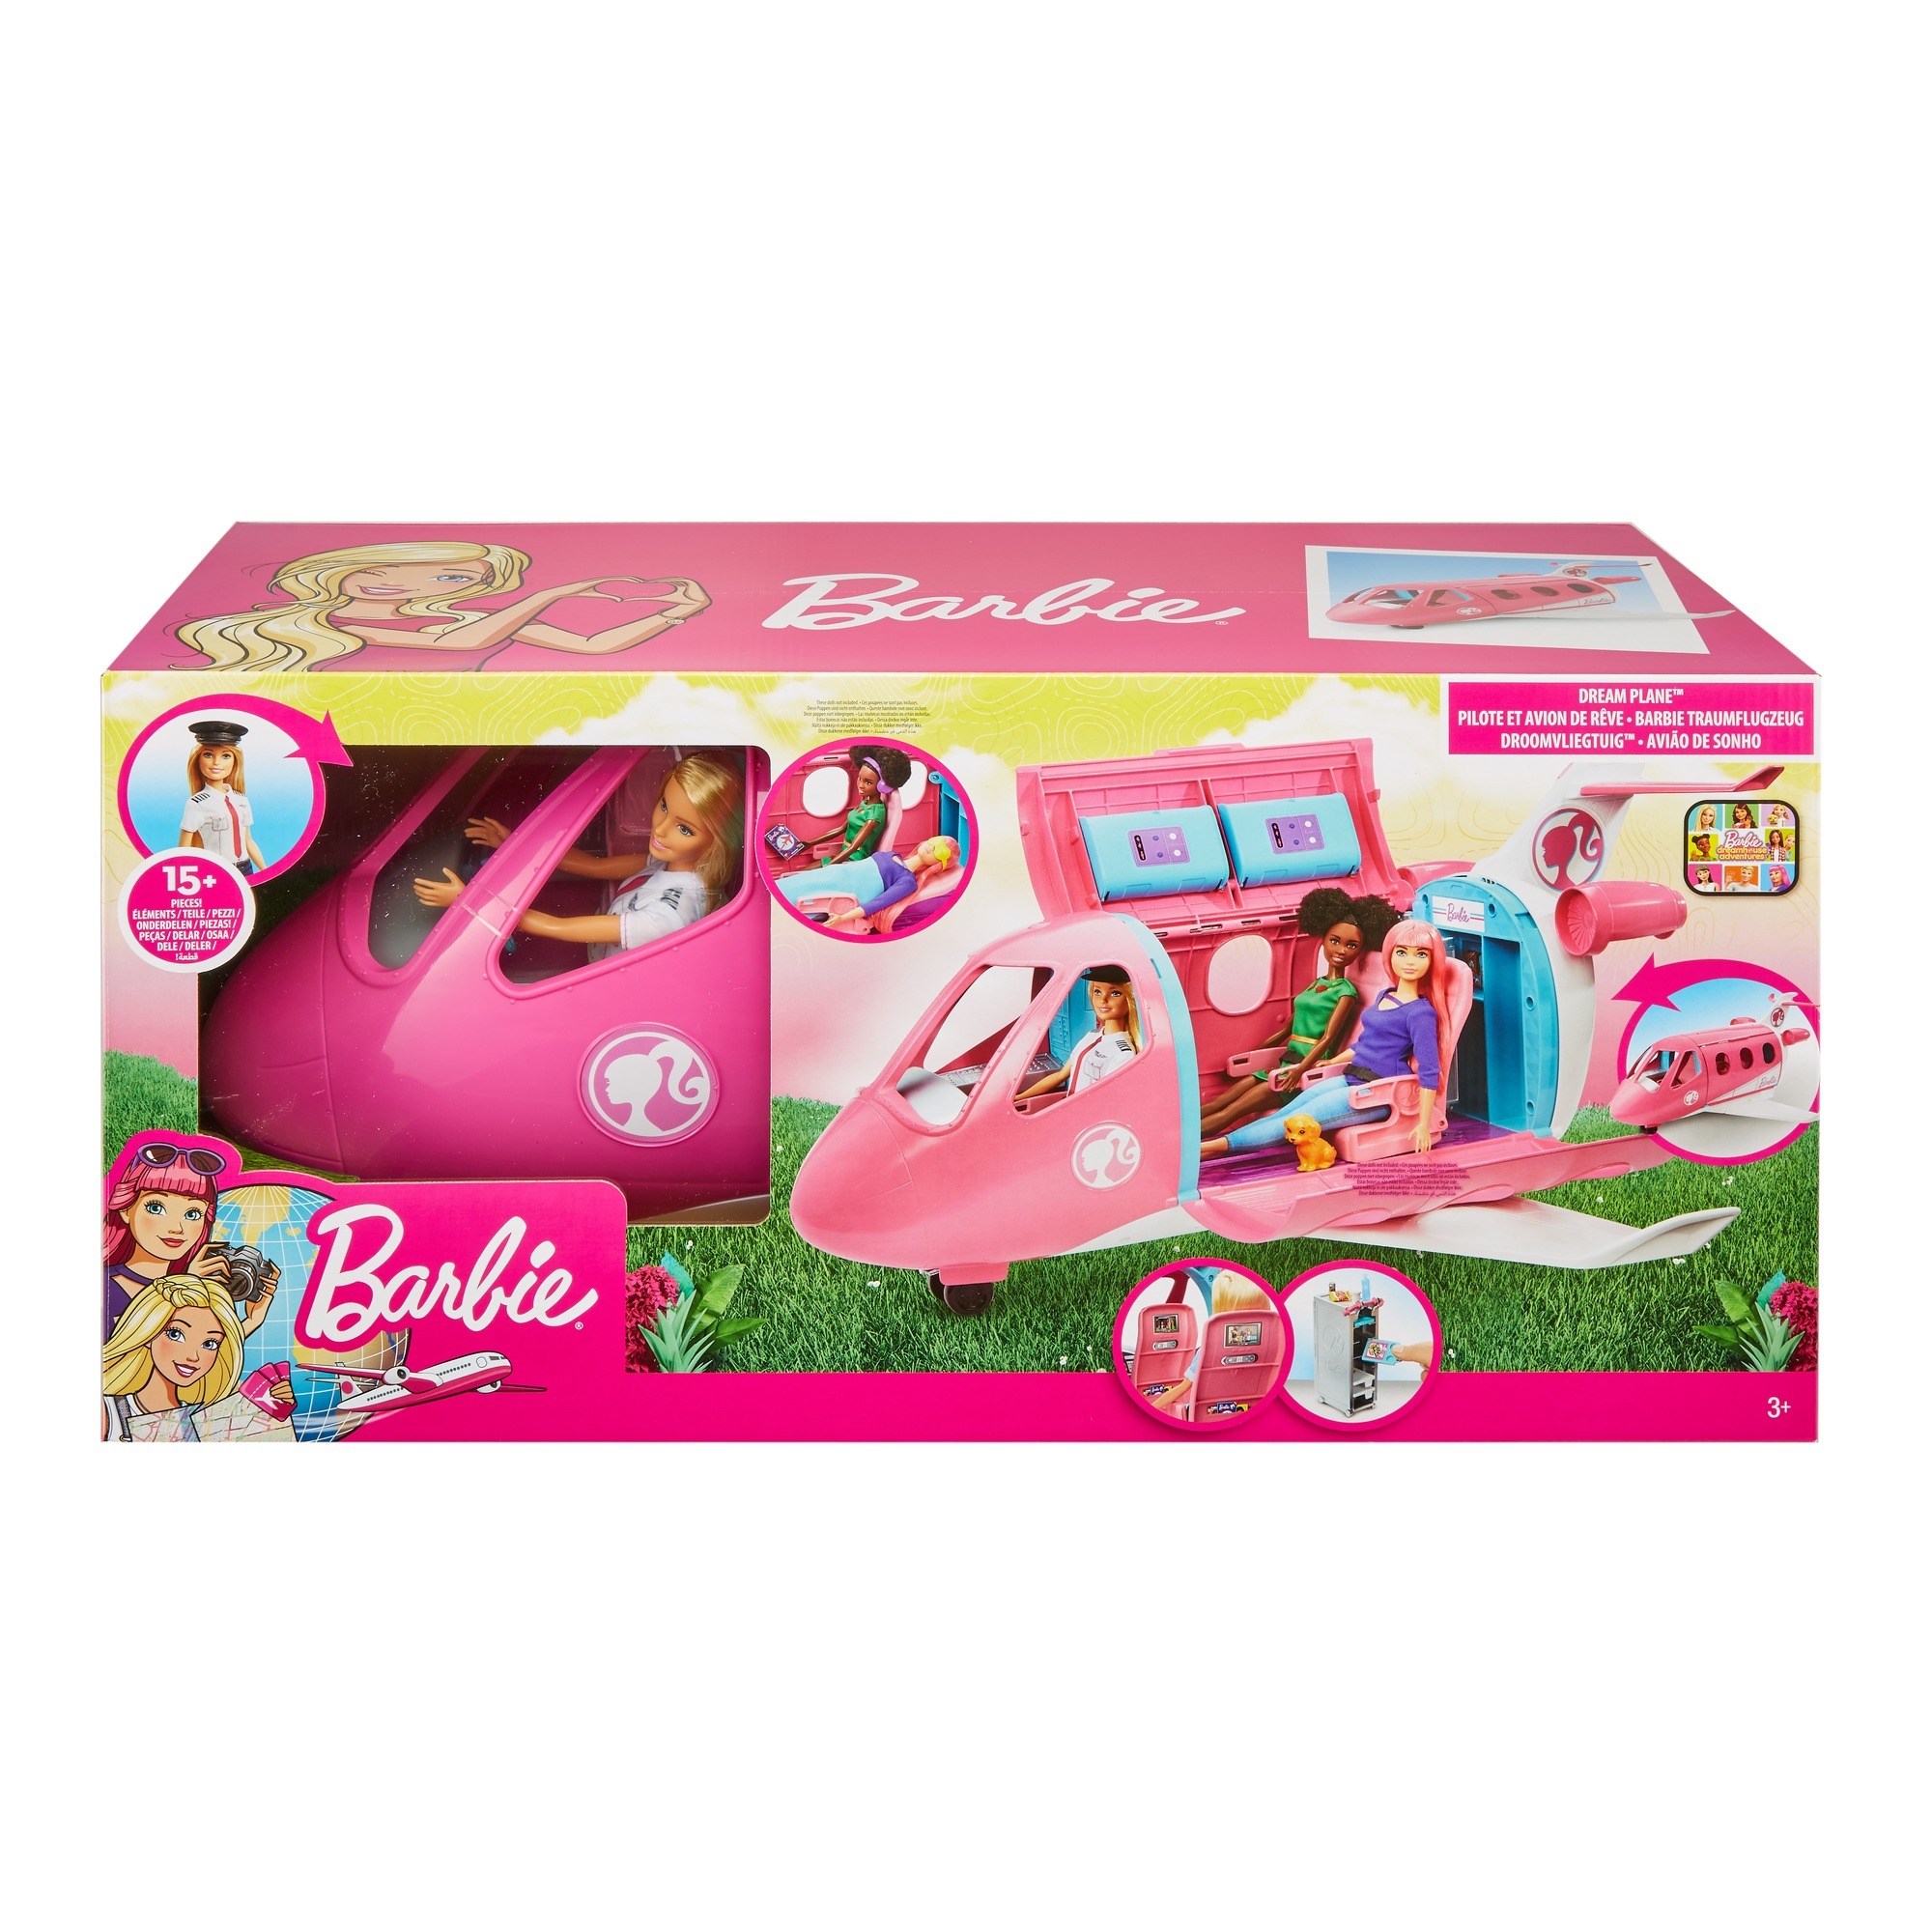 Barbie Jet/Pop